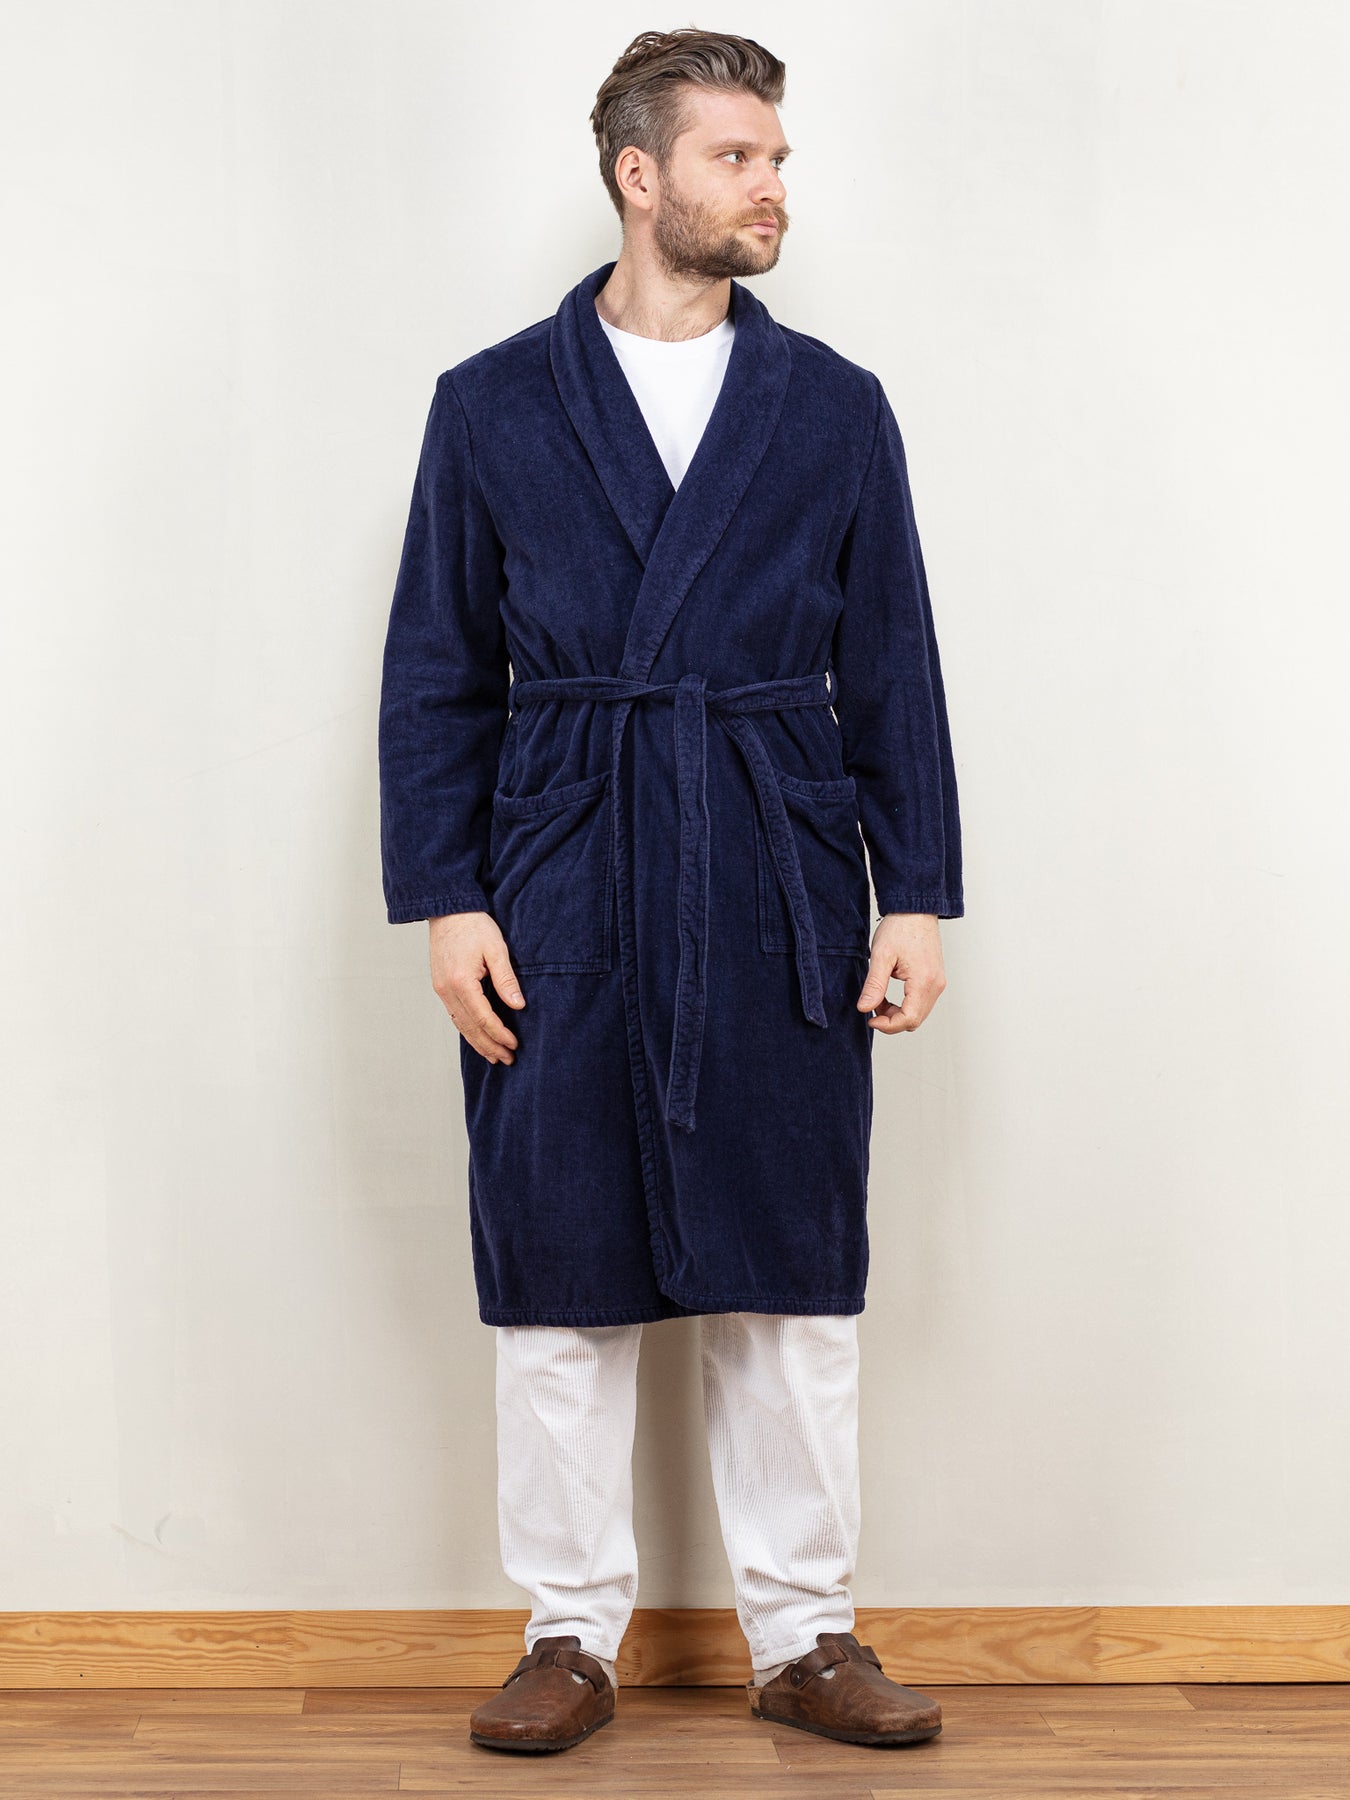 Fine Men's Bath Robe / Vintage Tiny Print Dressing Gown / Soft Elegant  Pajamas -  Canada